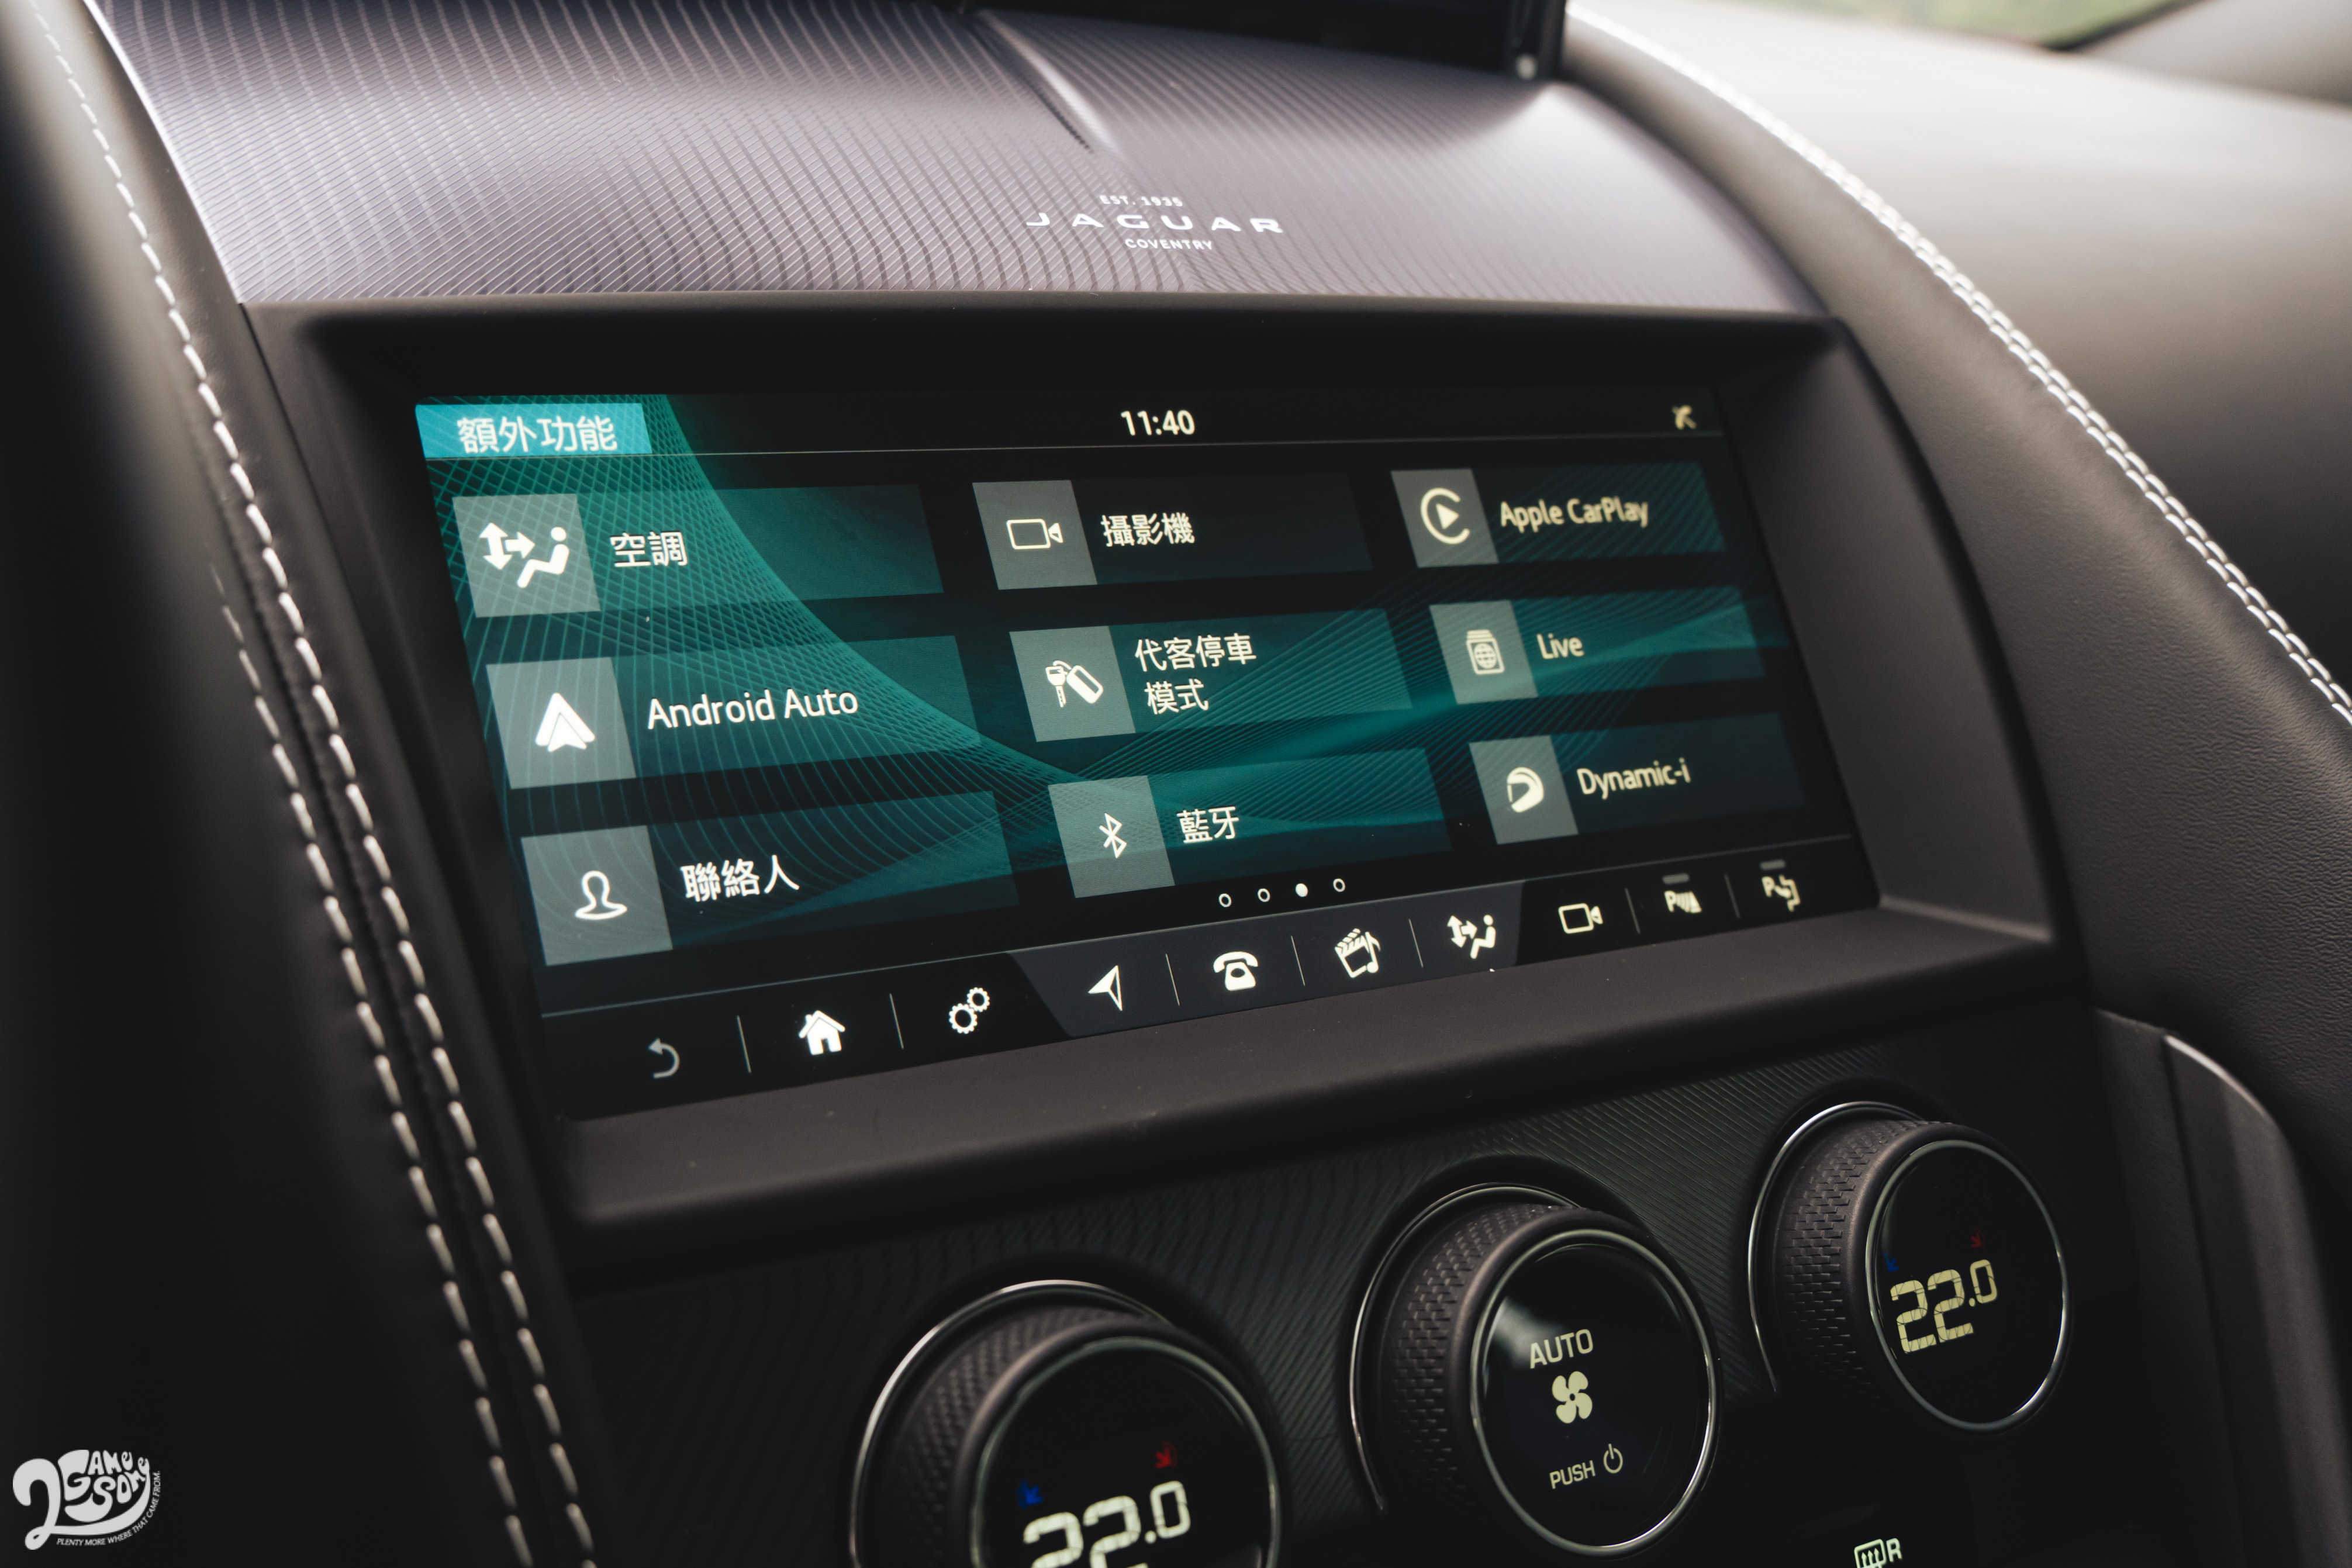 10 吋中央觸控螢幕支援 Apple CarPlay、Android Auto。